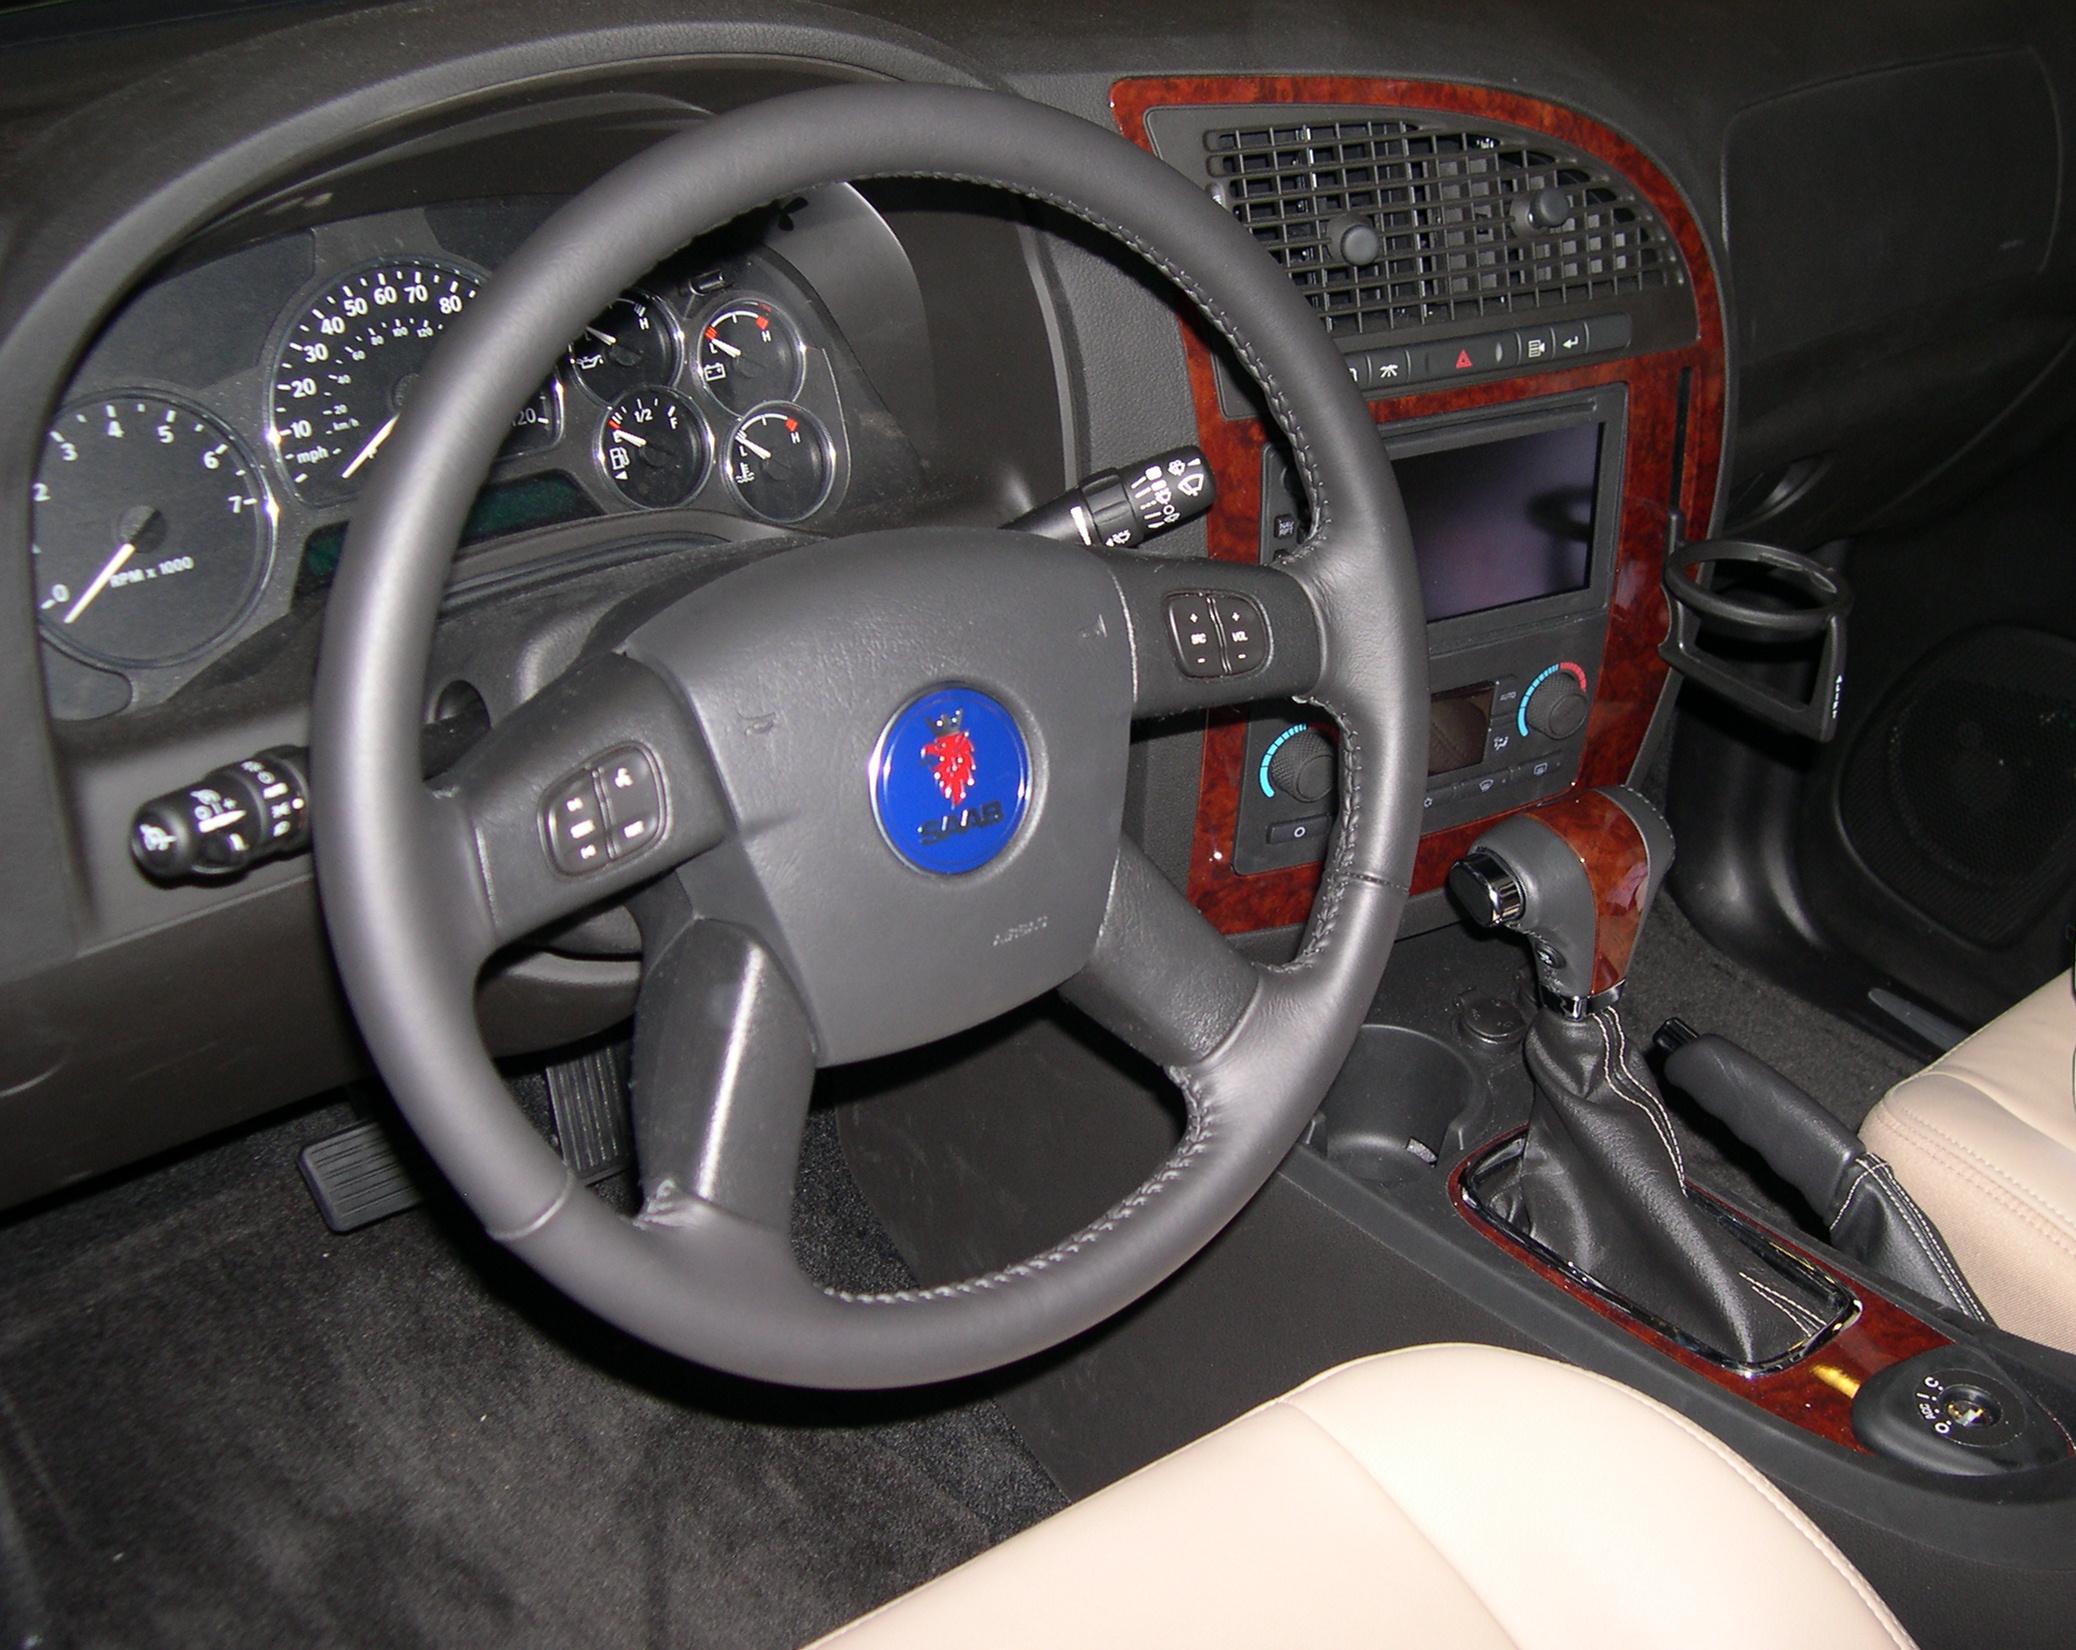 File:2006 Saab 9-7X interior.jpg - Wikimedia Commons